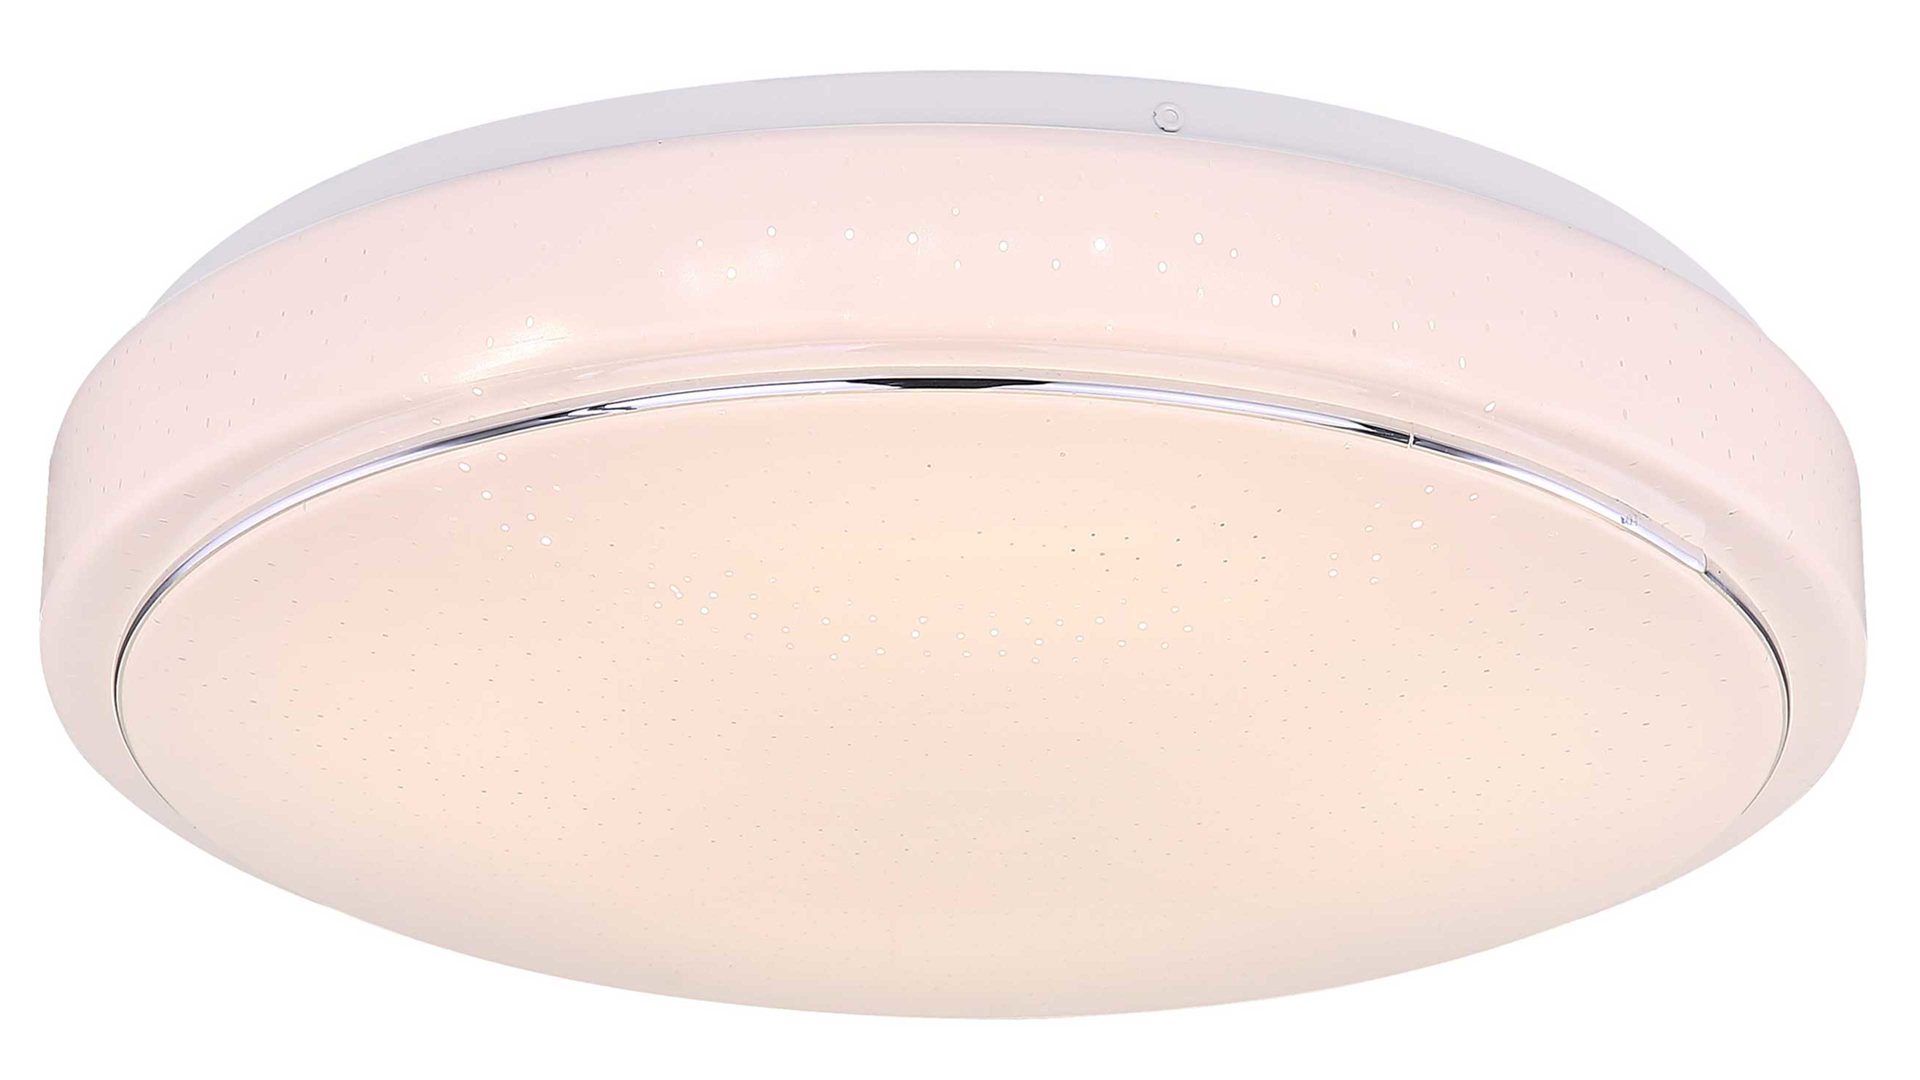 Deckenleuchte Globo lighting aus Kunststoff in Weiß GLOBO Deckenleuchte Kalle Weiß & Opalweiß - Durchmesser ca. 38 cm